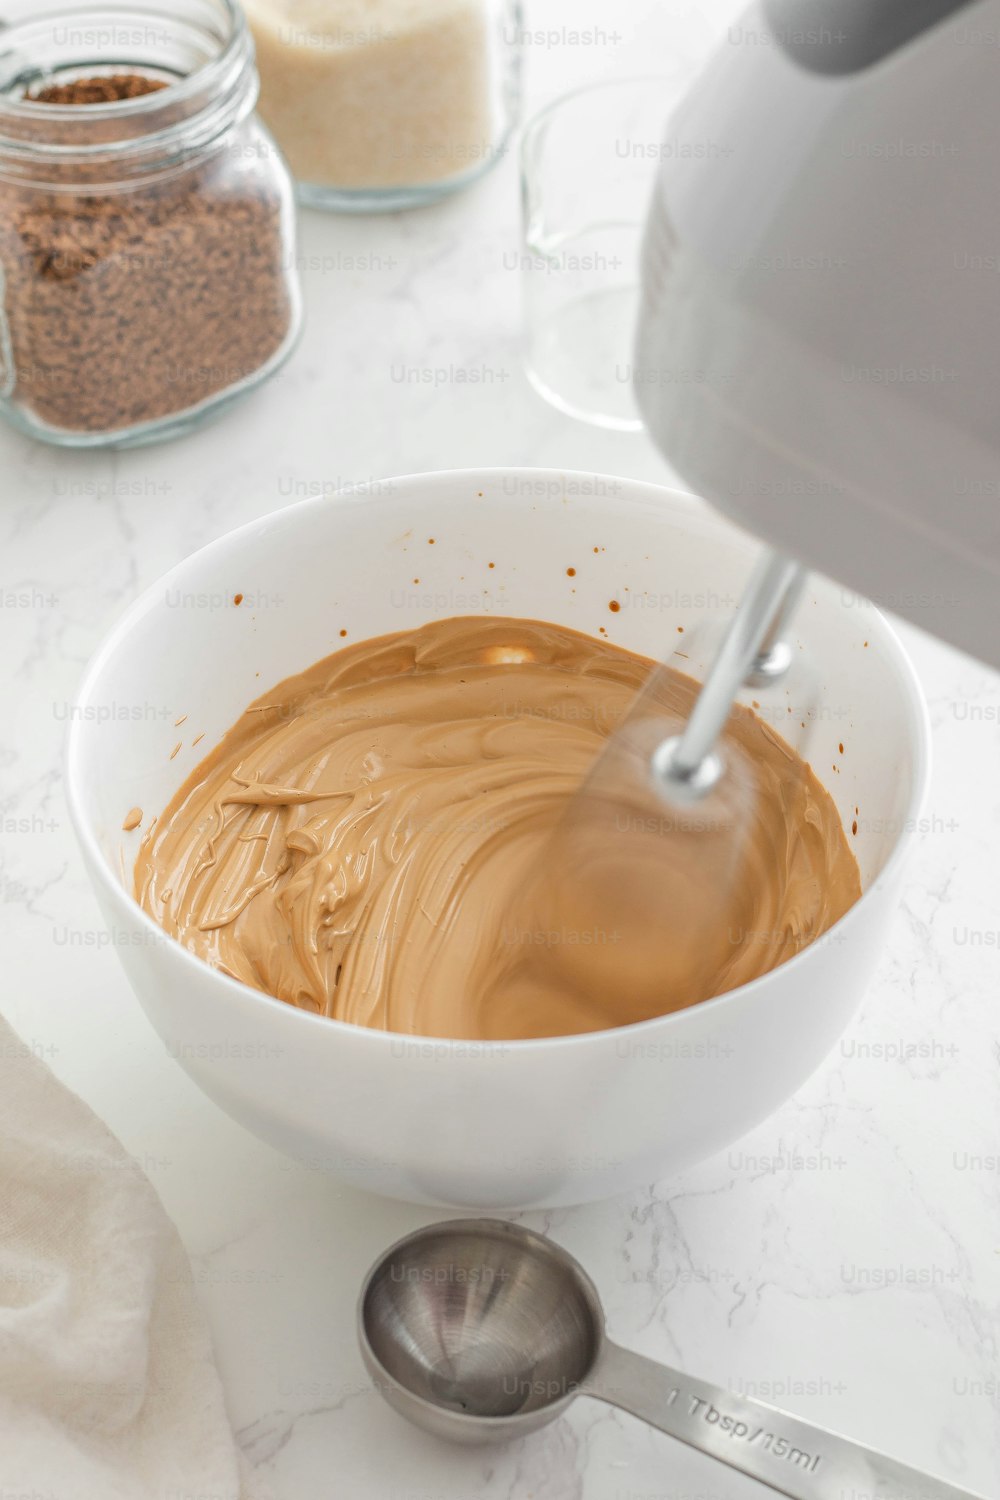 a bowl of peanut butter next to a mixer